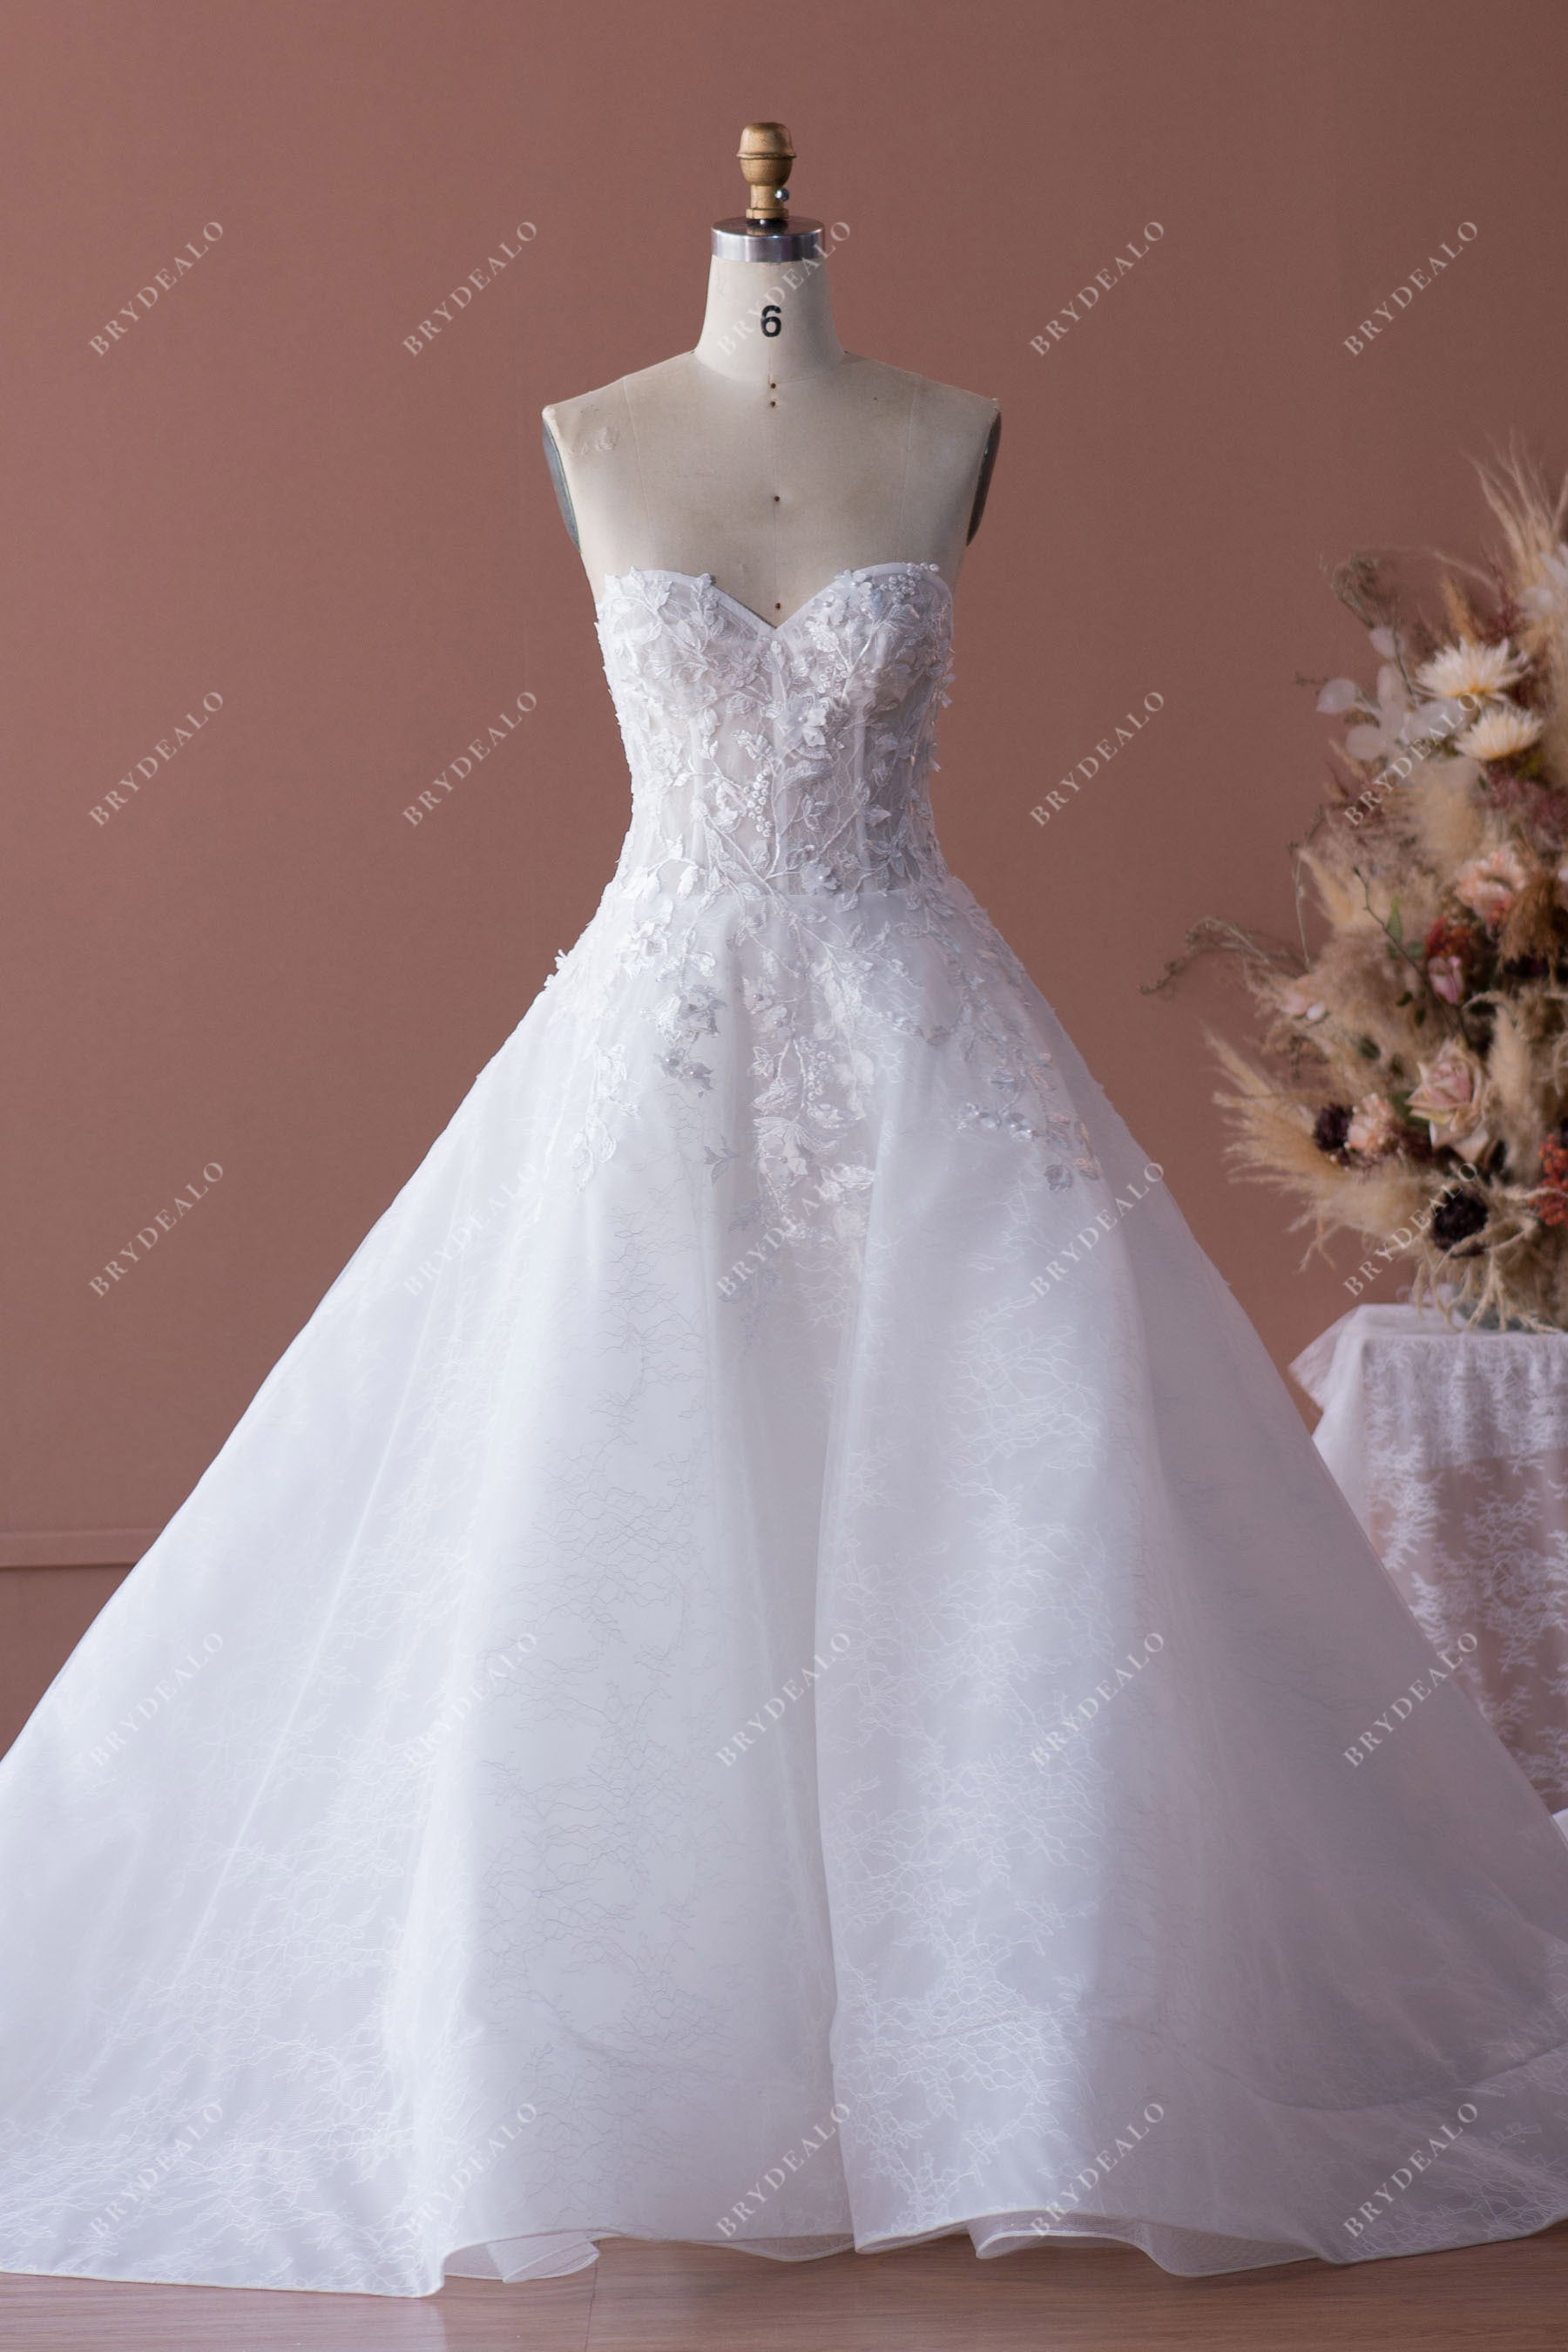 Strapless Sweetheart Corset Designer Lace Ballgown Wedding Dress